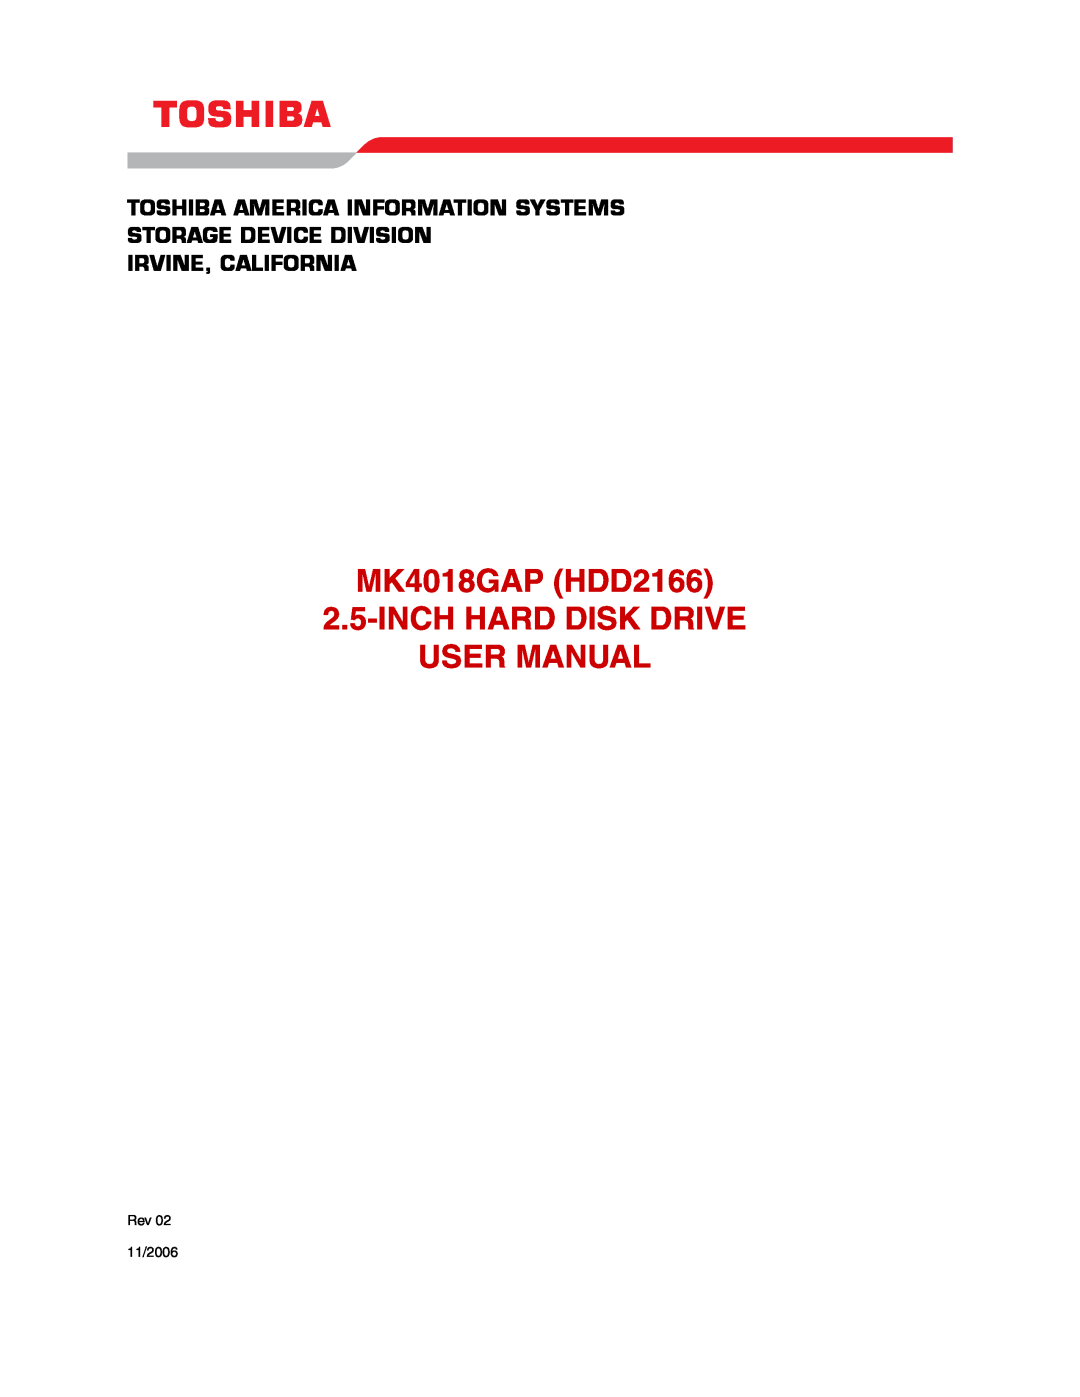 Toshiba user manual MK4018GAP HDD2166 2.5-INCH HARD DISK DRIVE USER MANUAL, Irvine, California, Rev 11/2006 